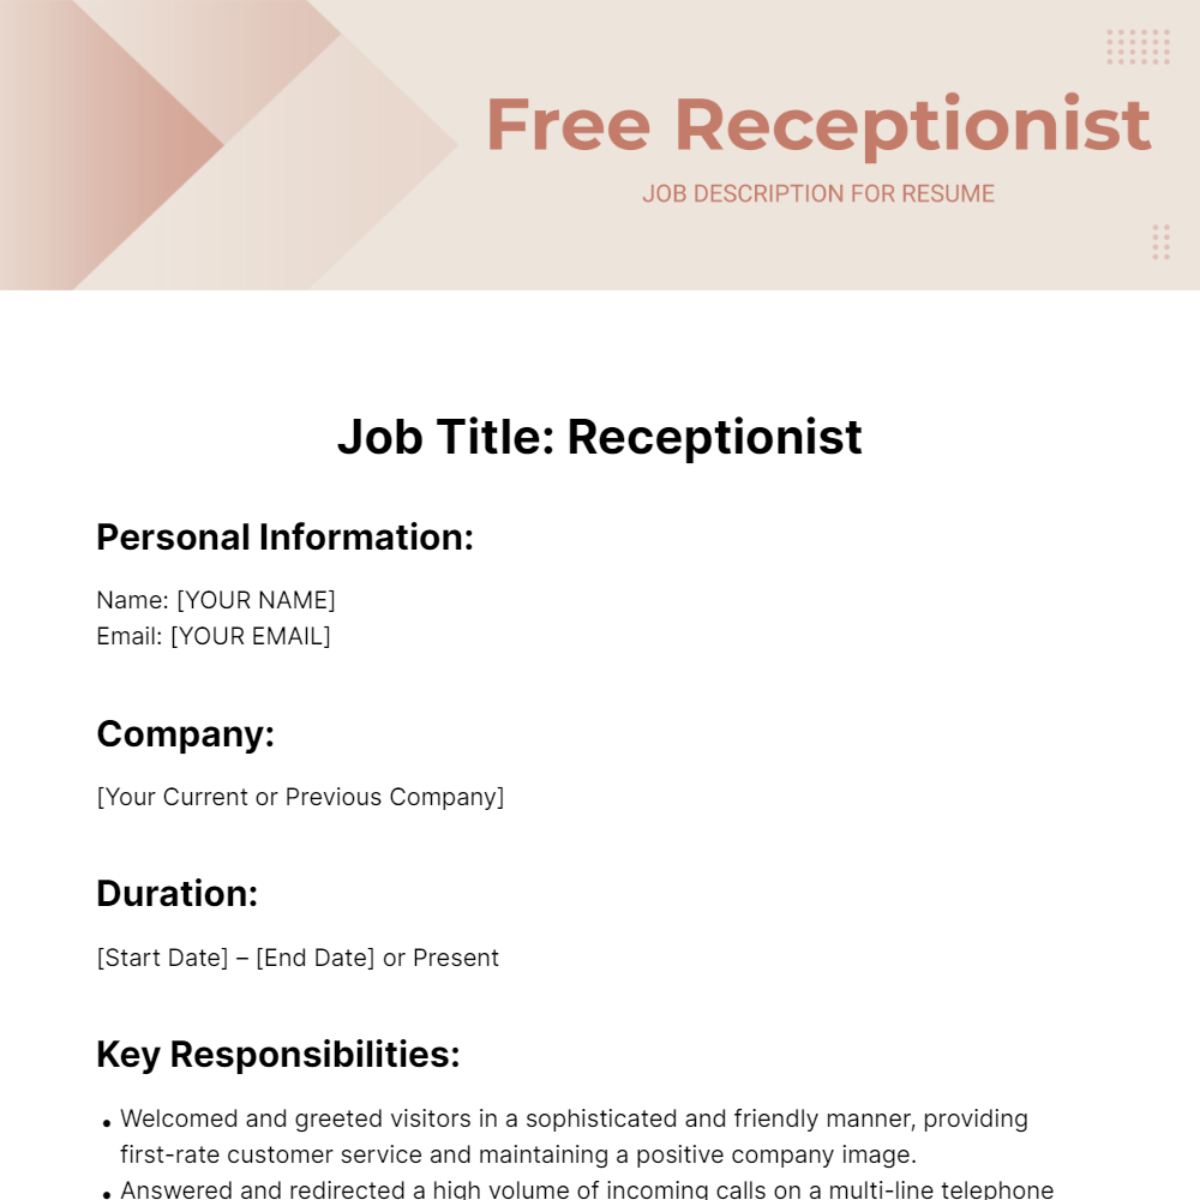 Receptionist Job Description for Resume Template